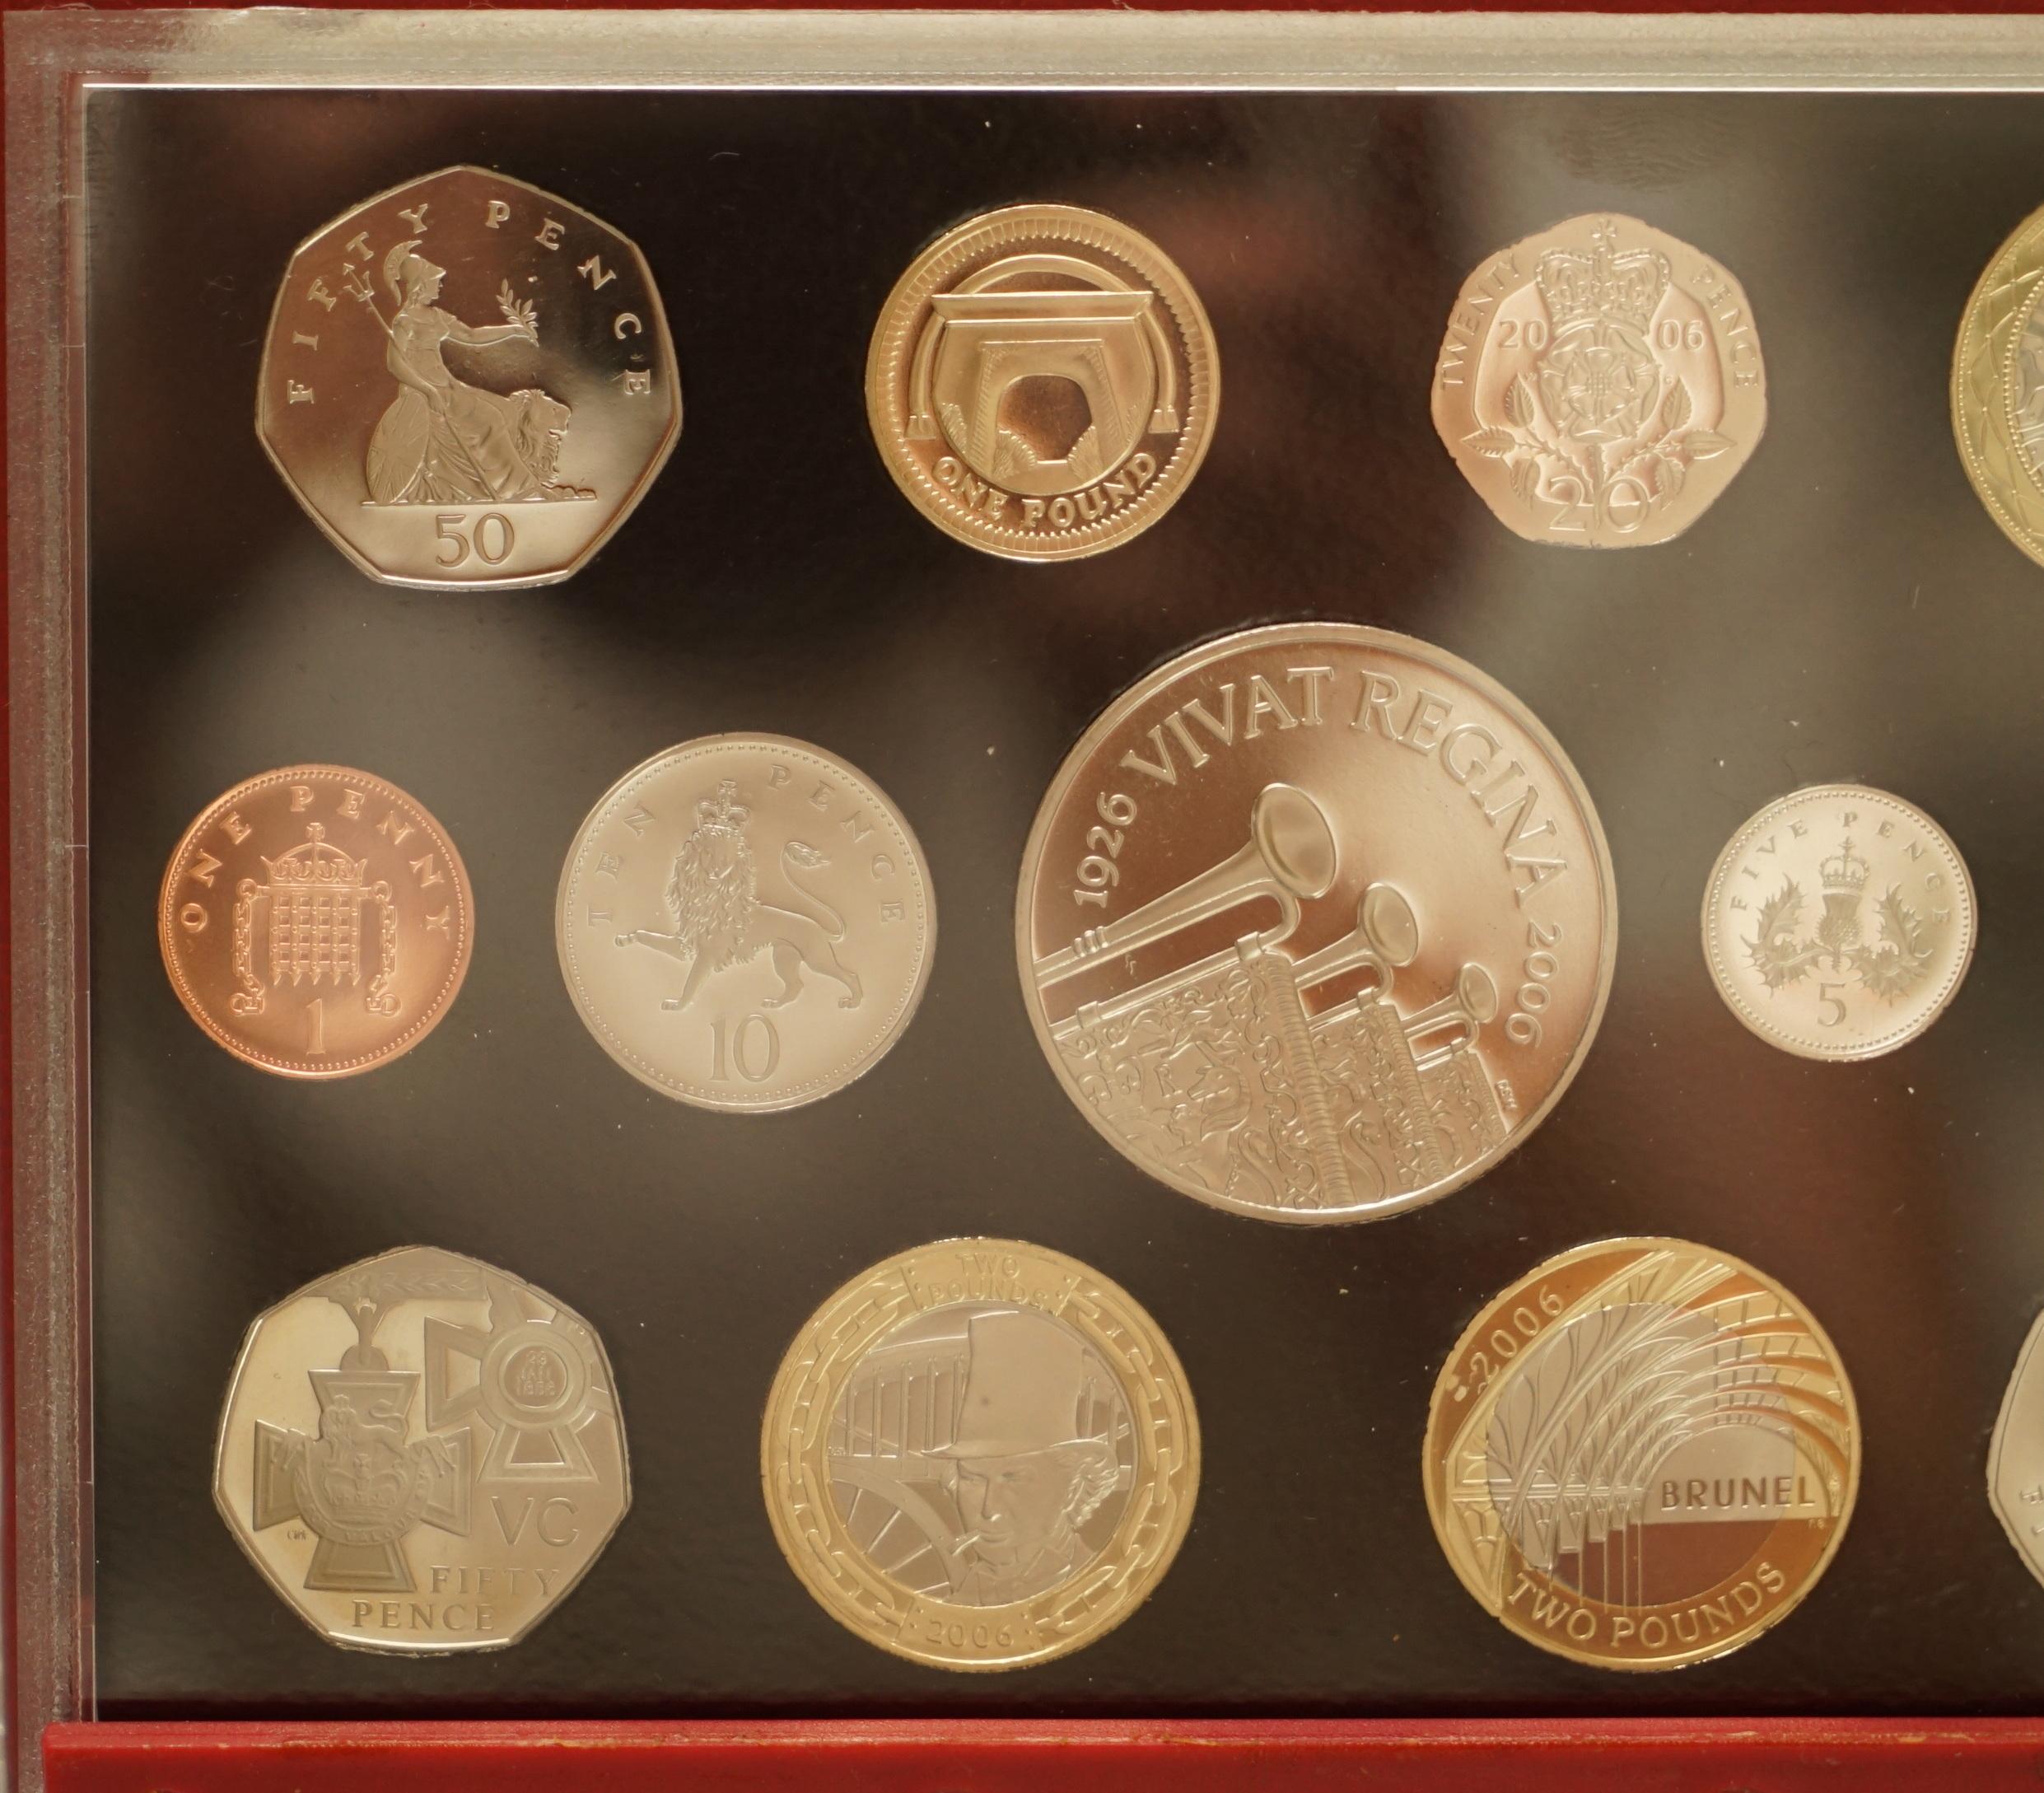 13 Coin Royal Mint 1926, 2006 Queen Elizabeth Proof Set with £5 Vivat Regina 3